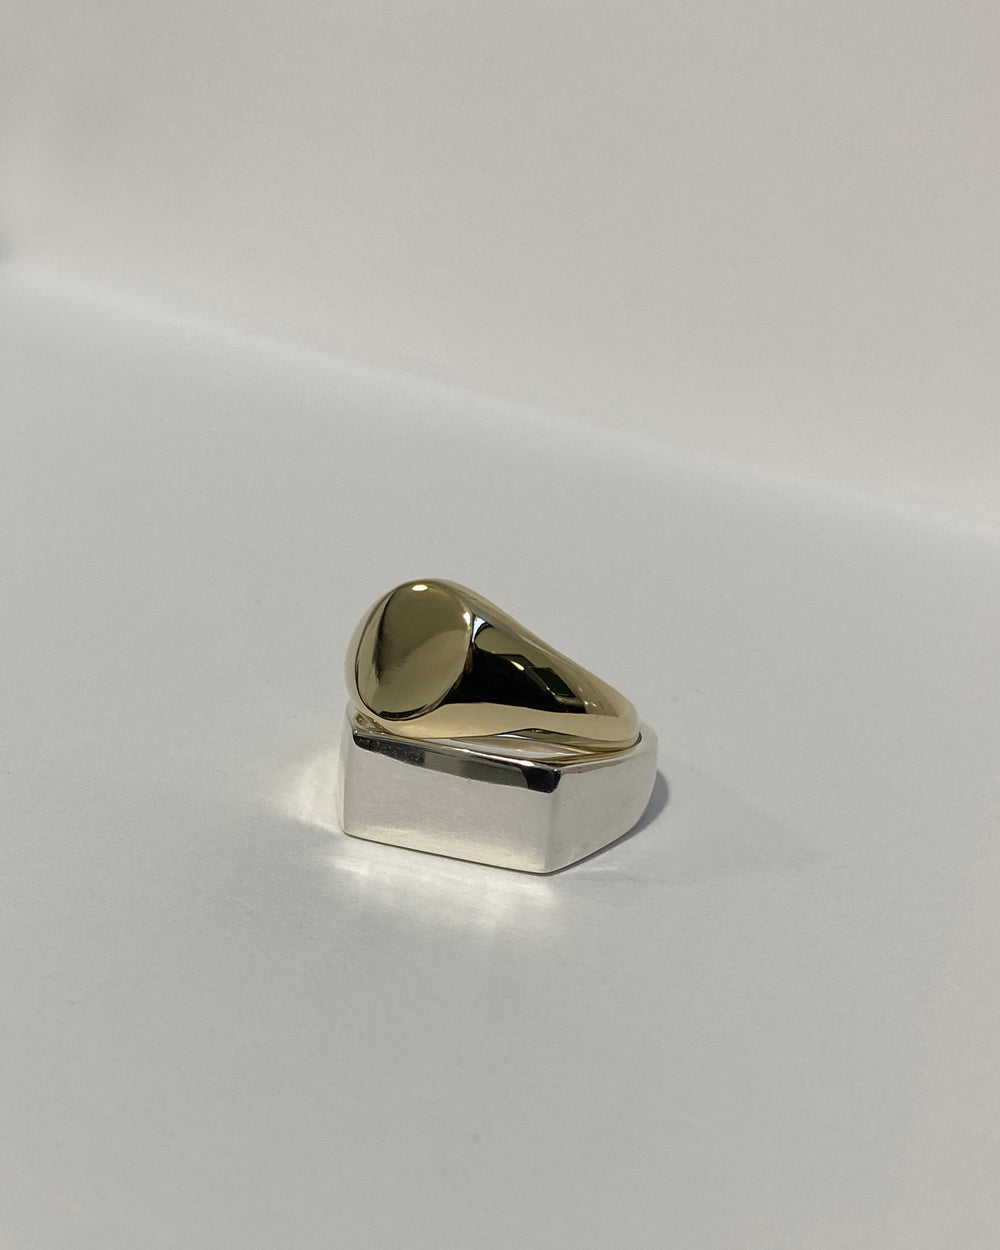 Custom Signet Ring 1.0 | Silver